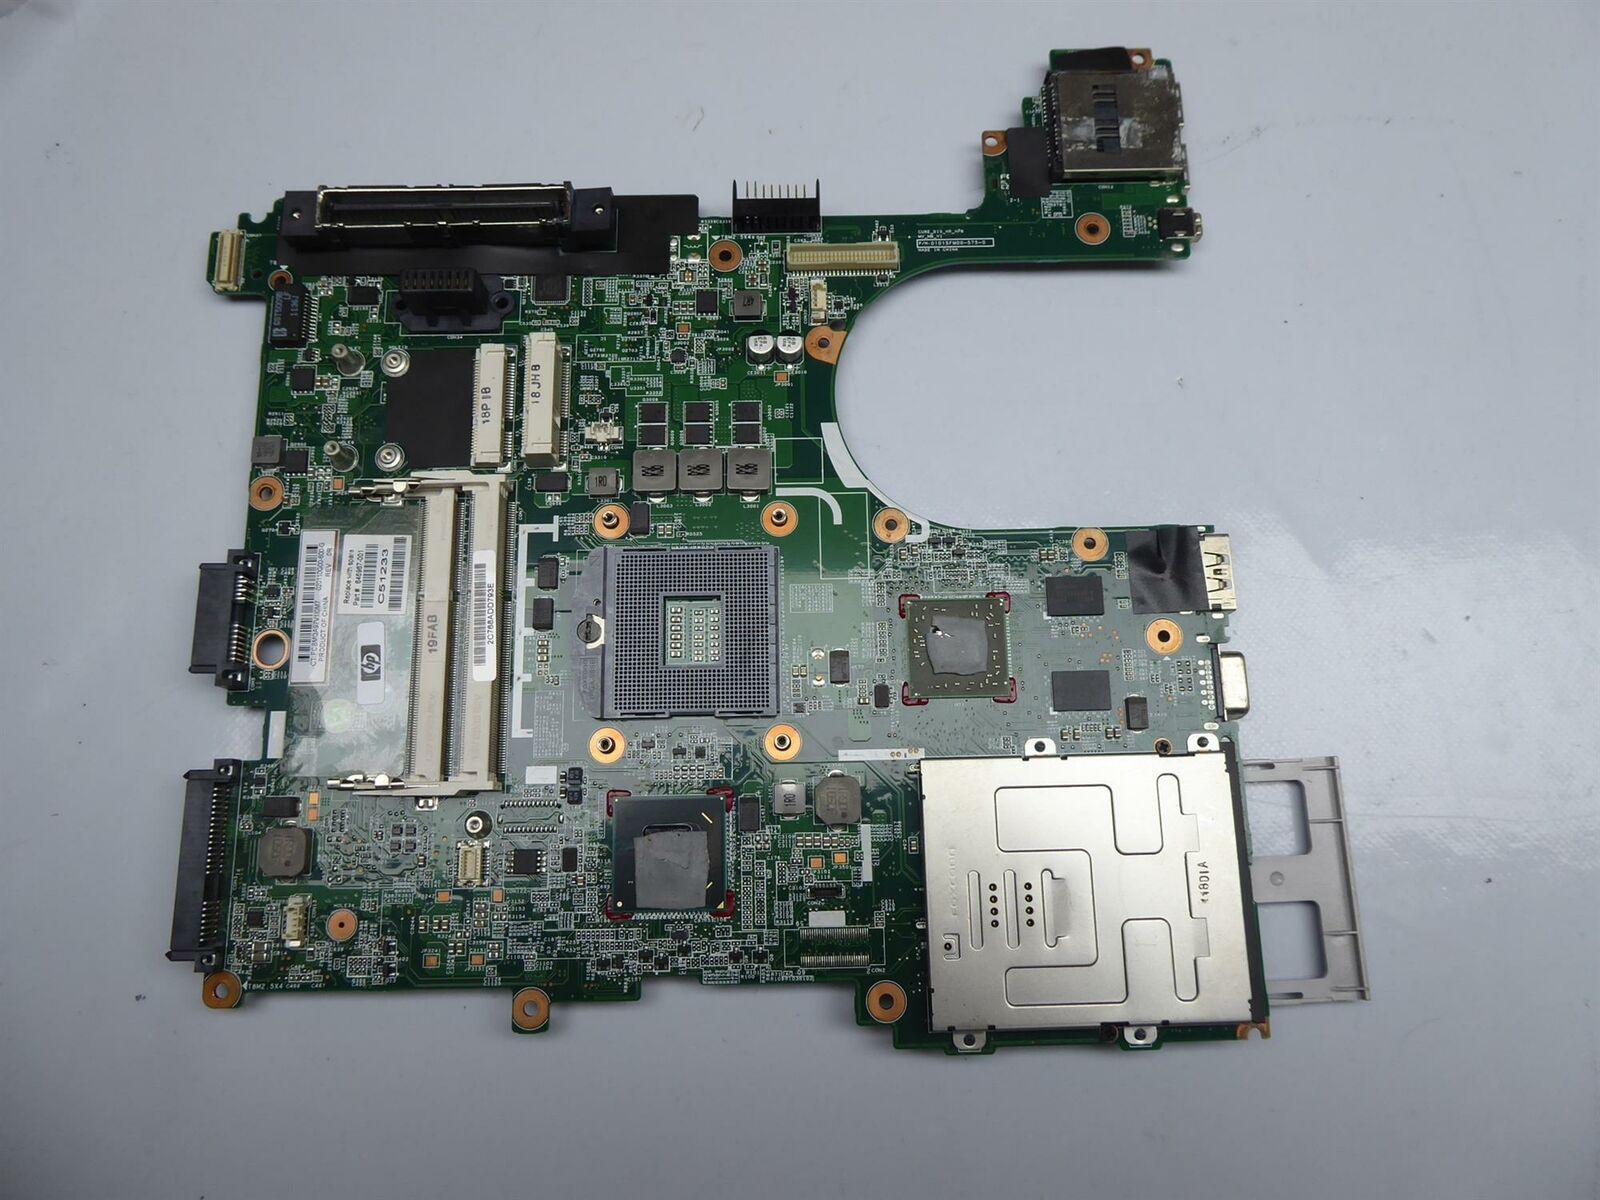 HP EliteBook 8560p Motherboard Motherboard 646967-001 Marke: HP/Compaq Produktart: Mainboard Herstellernumm - Click Image to Close